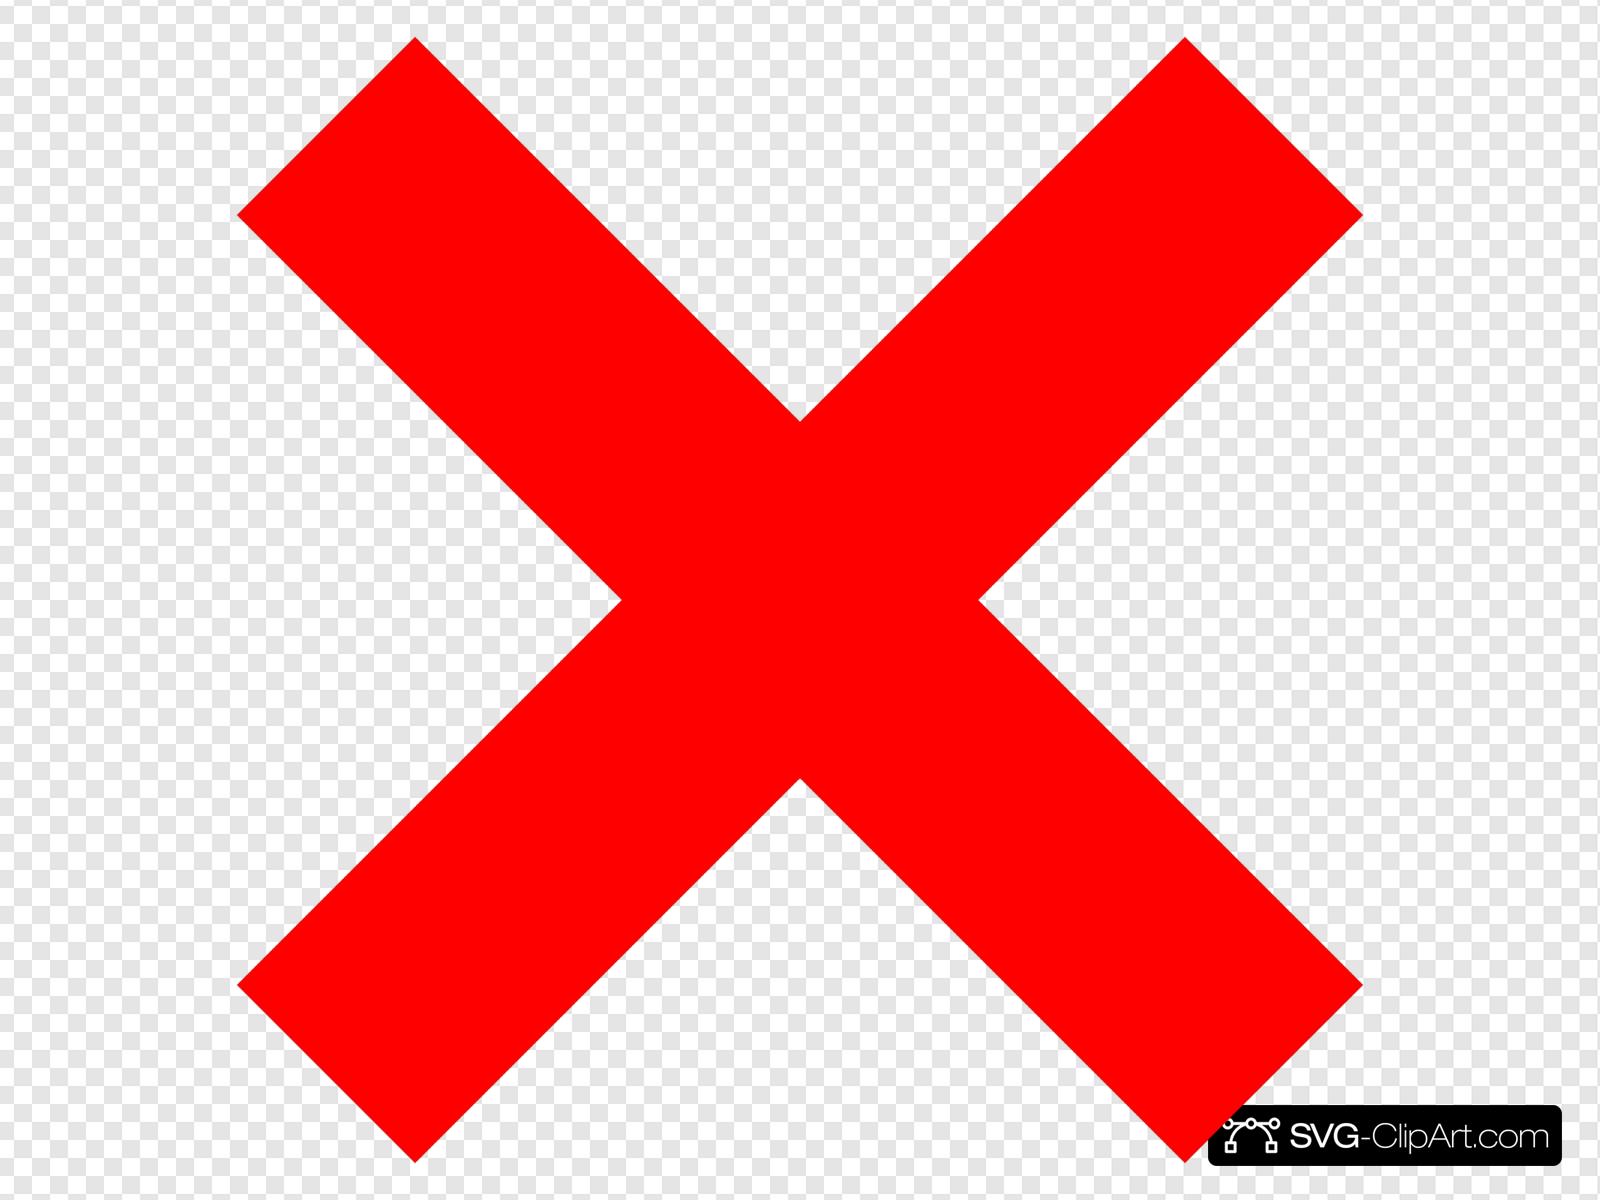 Image x icon. Красный крестик. Крестик значок. Крестик для монтажа. Пиктограмма красный крестик.